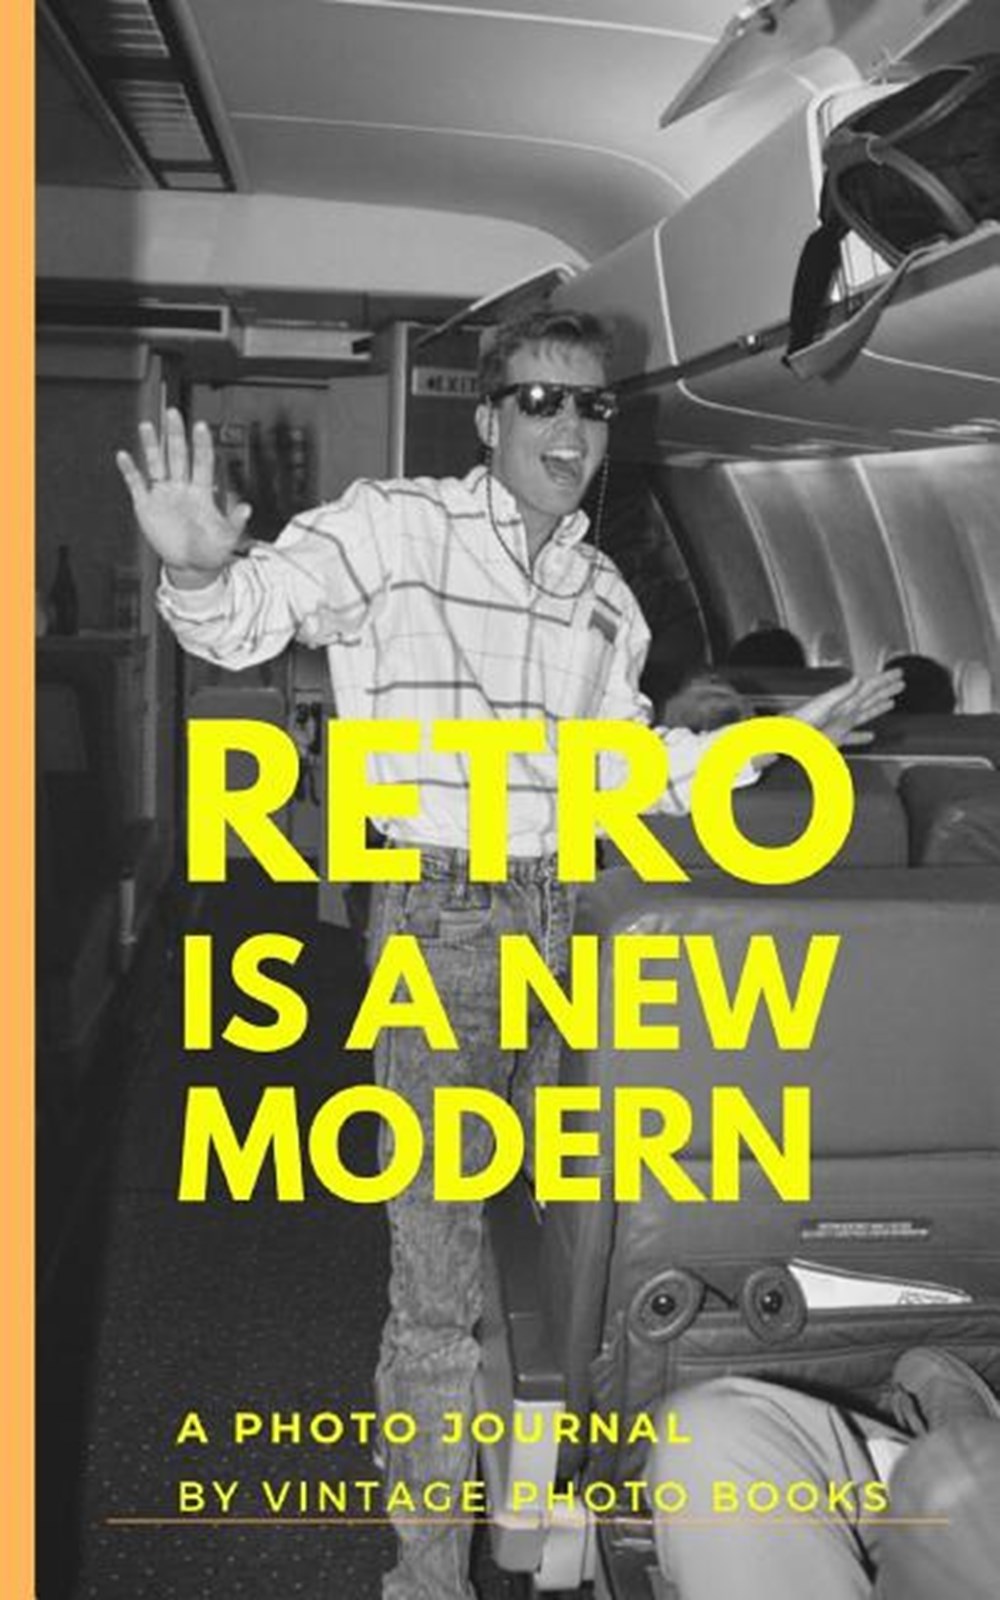 Retro is new modern